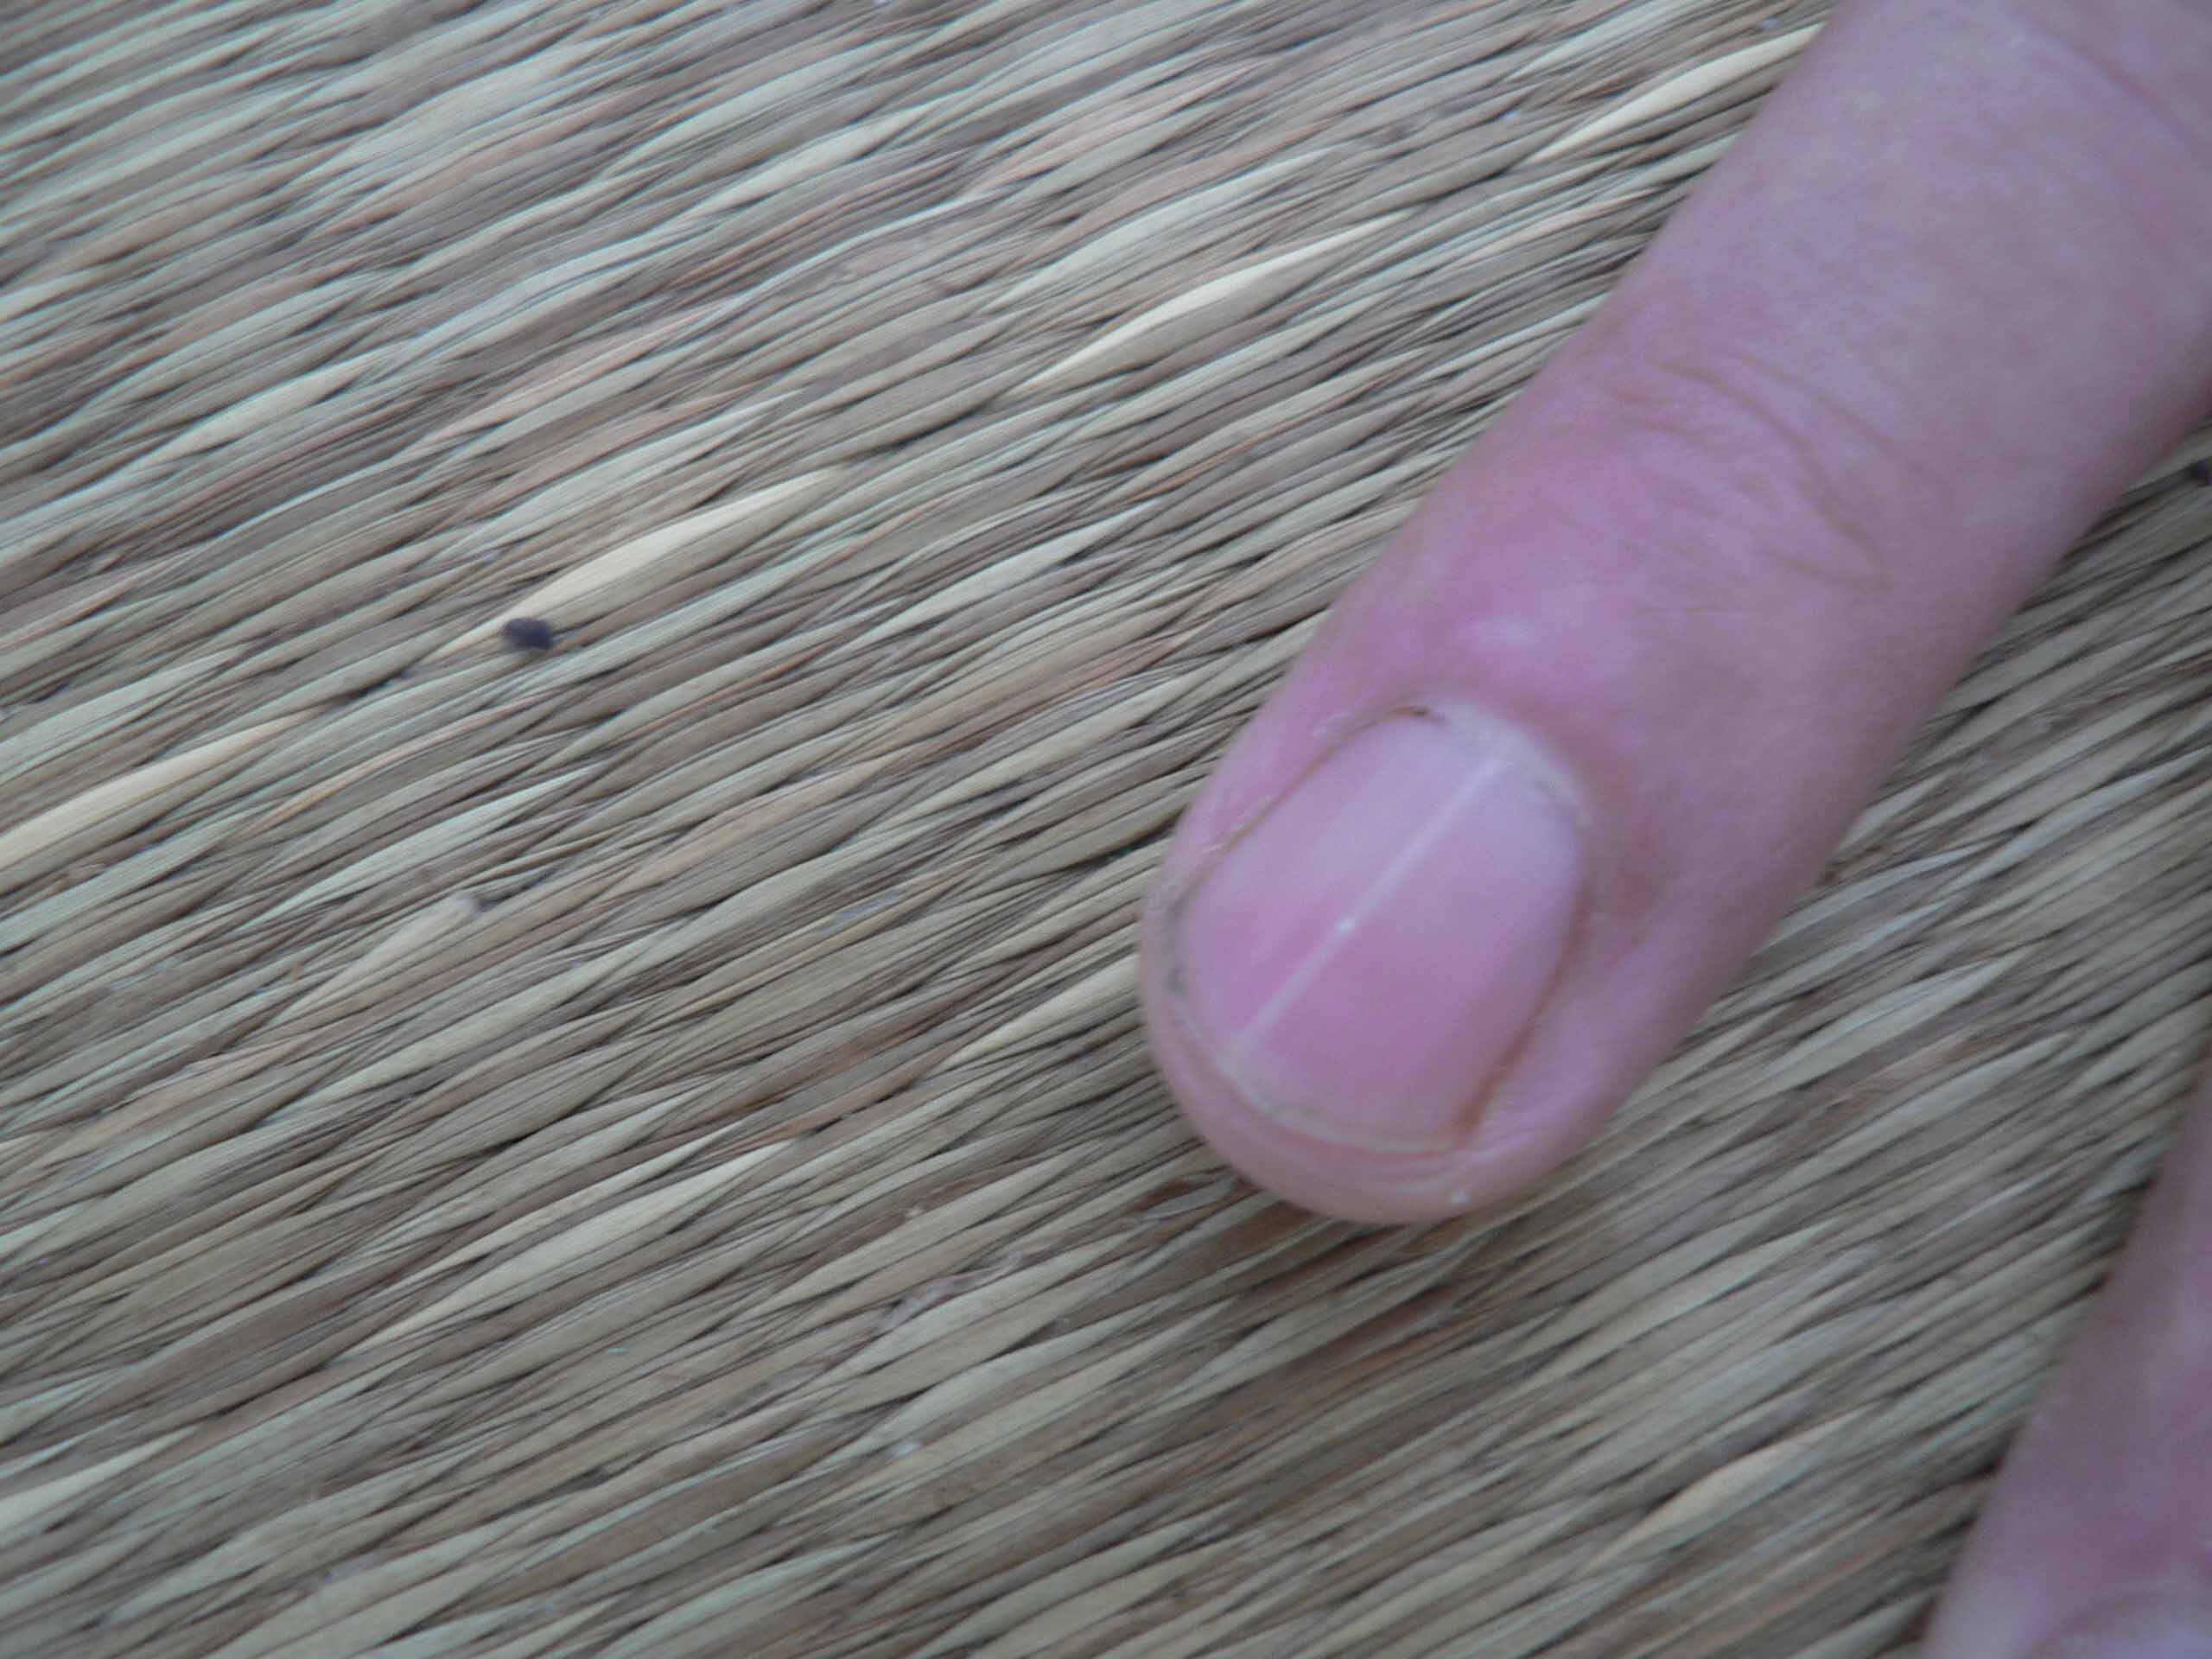 Brutal Torture Methods Inserting Needles Into Fingertips Burning Fingernails And Pulling Off Fingernails With Pliers Photos Falun Dafa Minghui Org